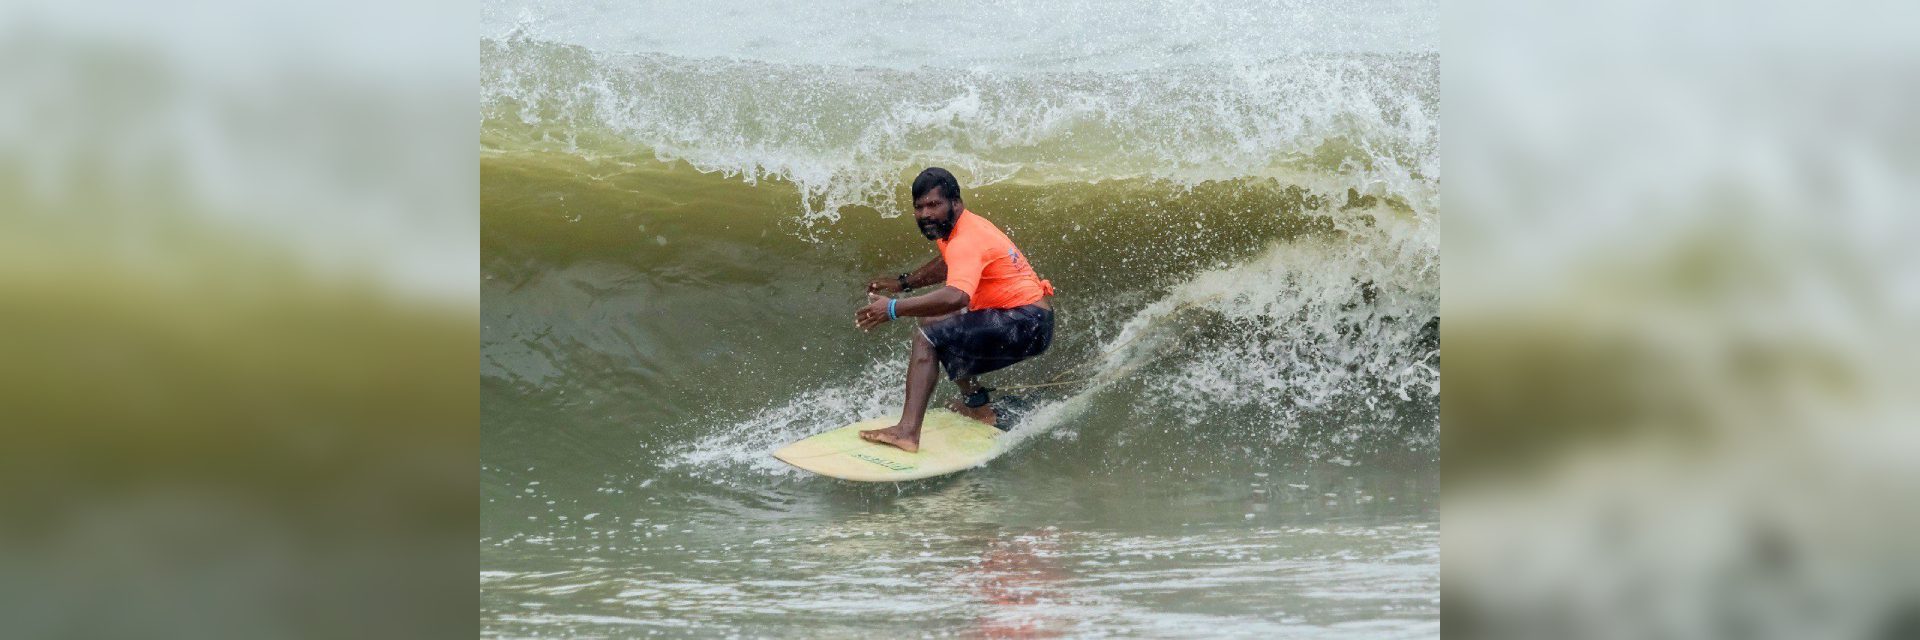 Wave Rider - Chennai's Covelong မှ တံငါသည်လေး Murthy Megavan သည် အေးအေးဆေးဆေး ရေလွှာလျှောစီးသူ ဖြစ်လာပုံ၊